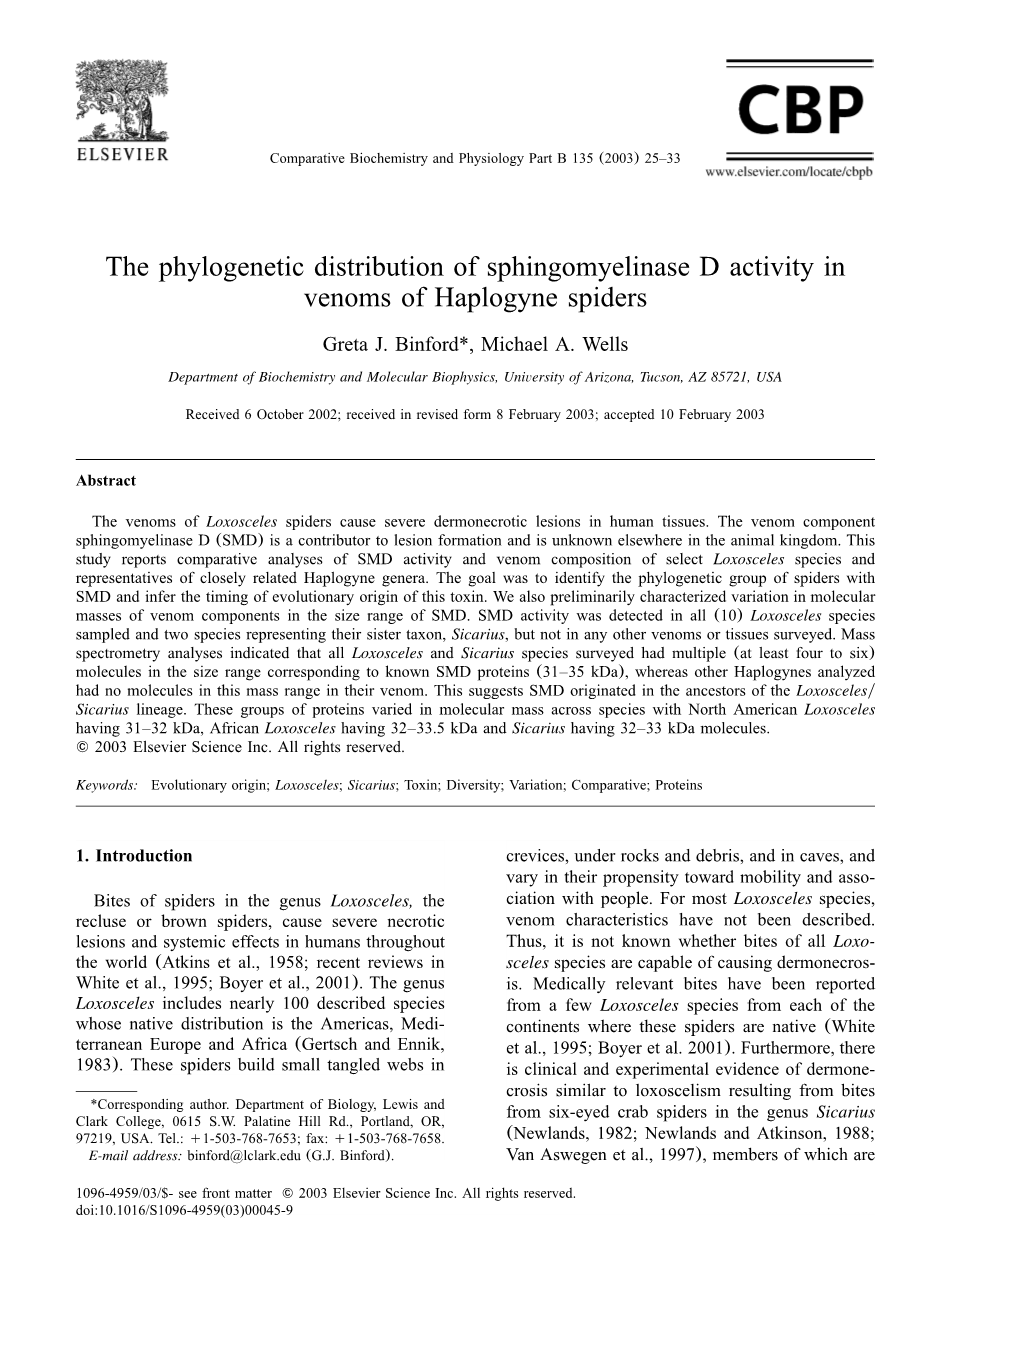 The Phylogenetic Distribution of Sphingomyelinase D Activity in Venoms of Haplogyne Spiders